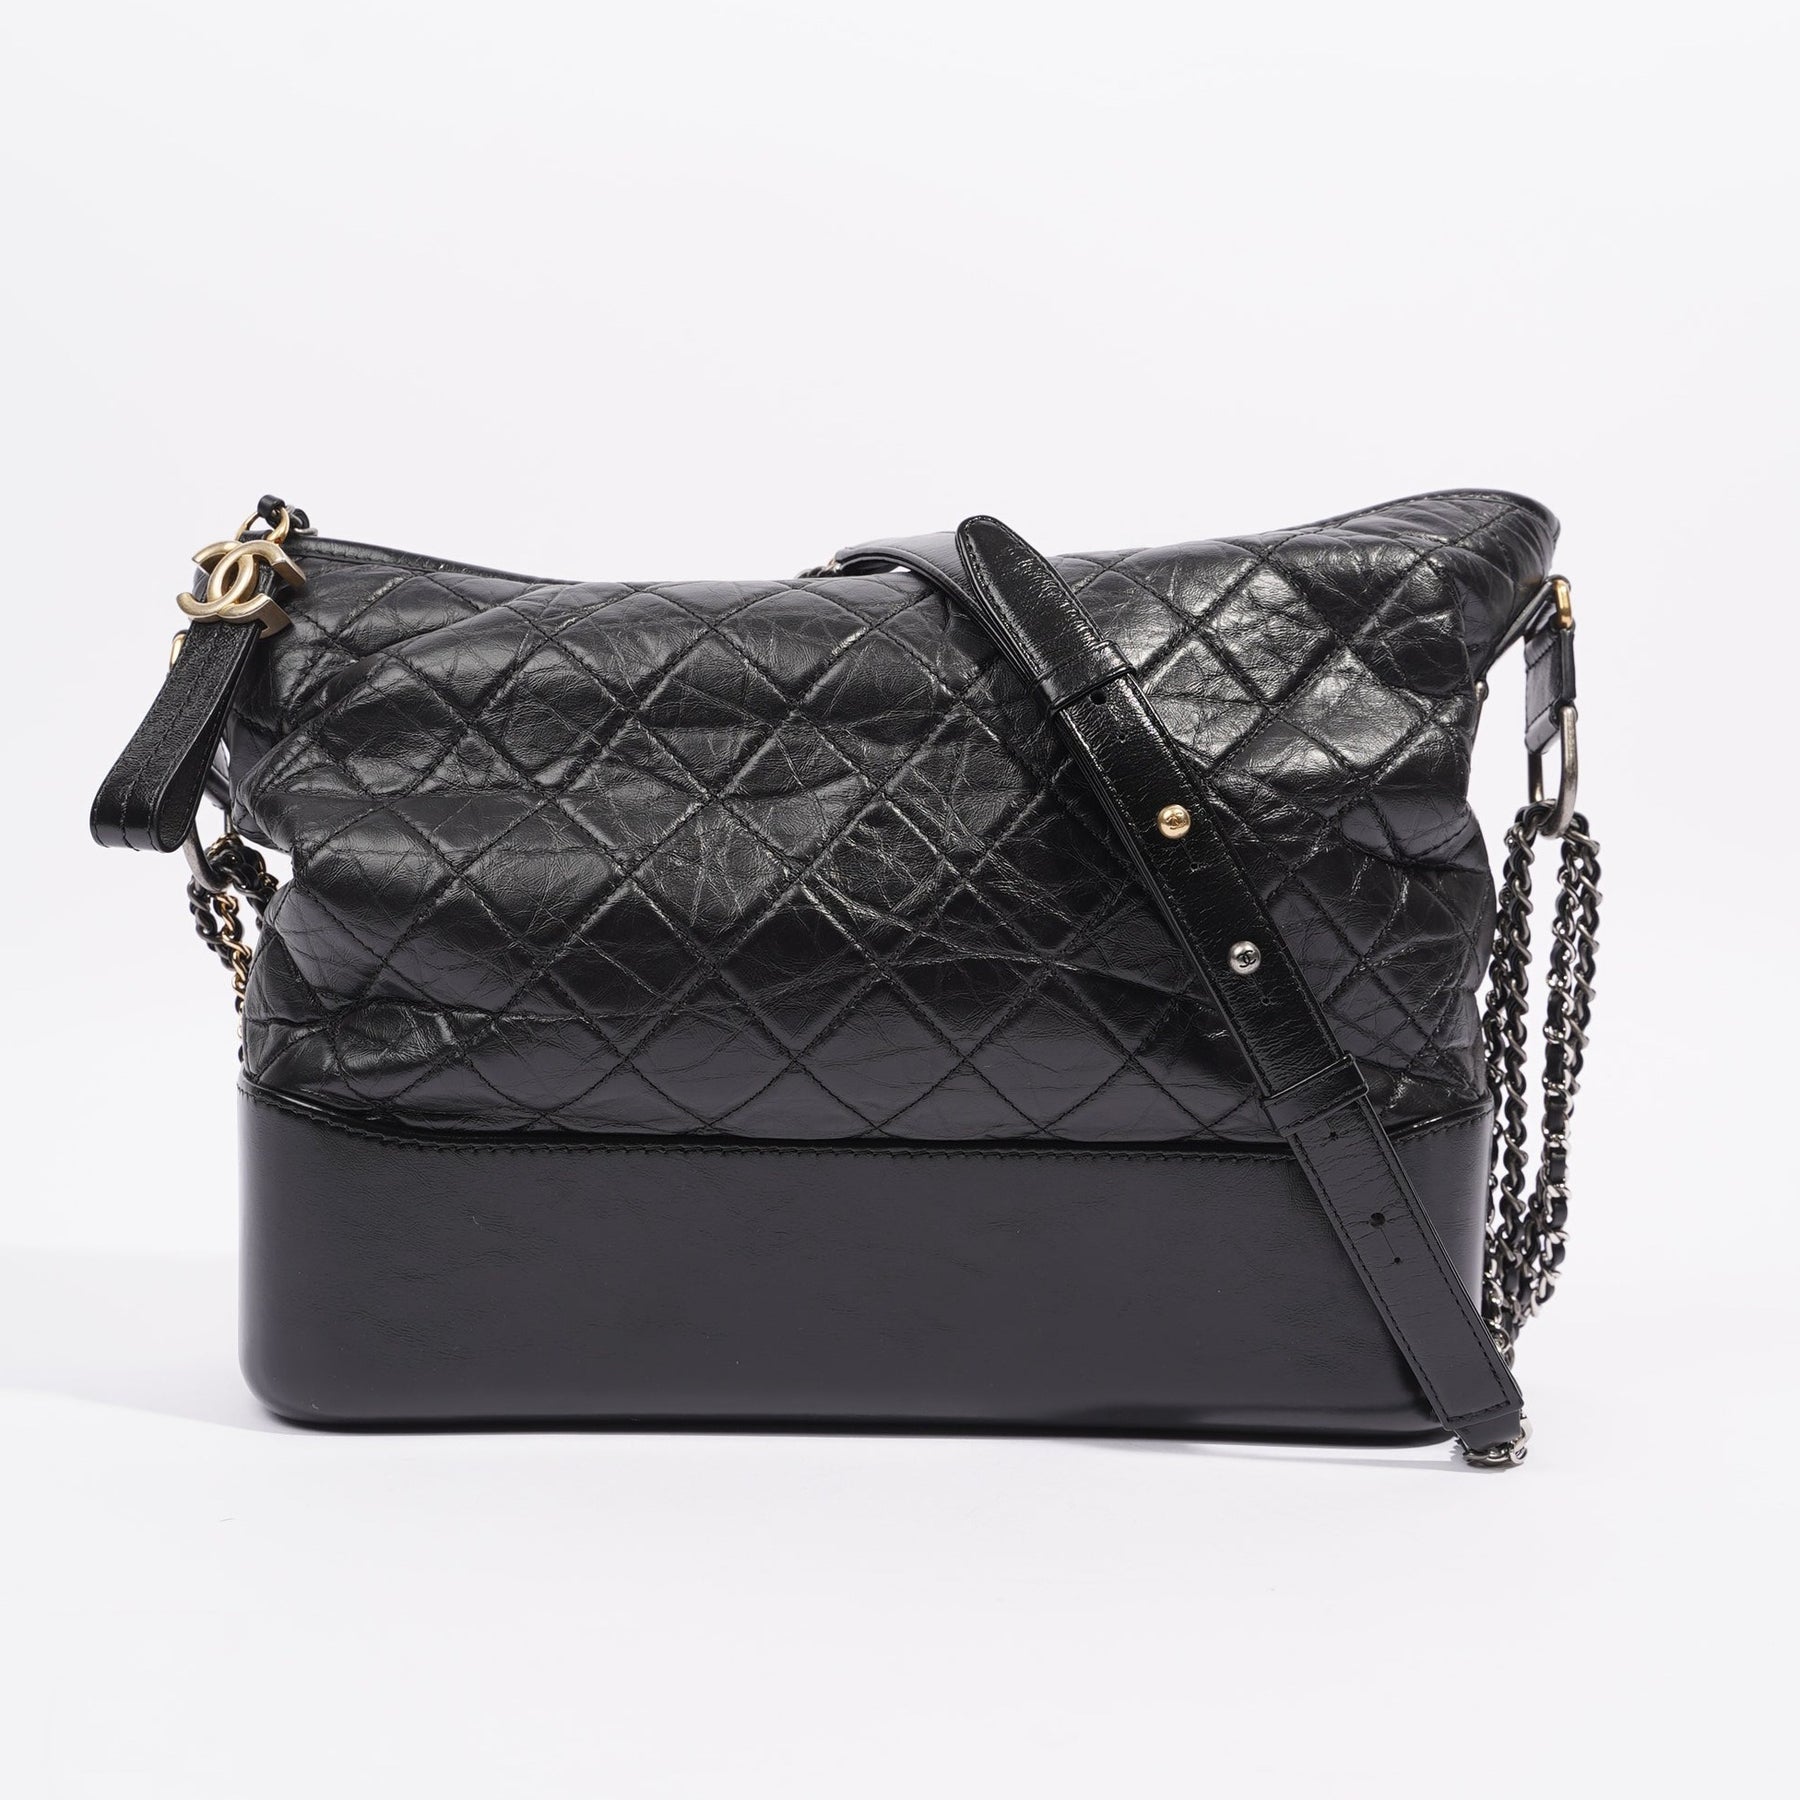 Chanel - Gabrielle Large Hobo Bag Noir